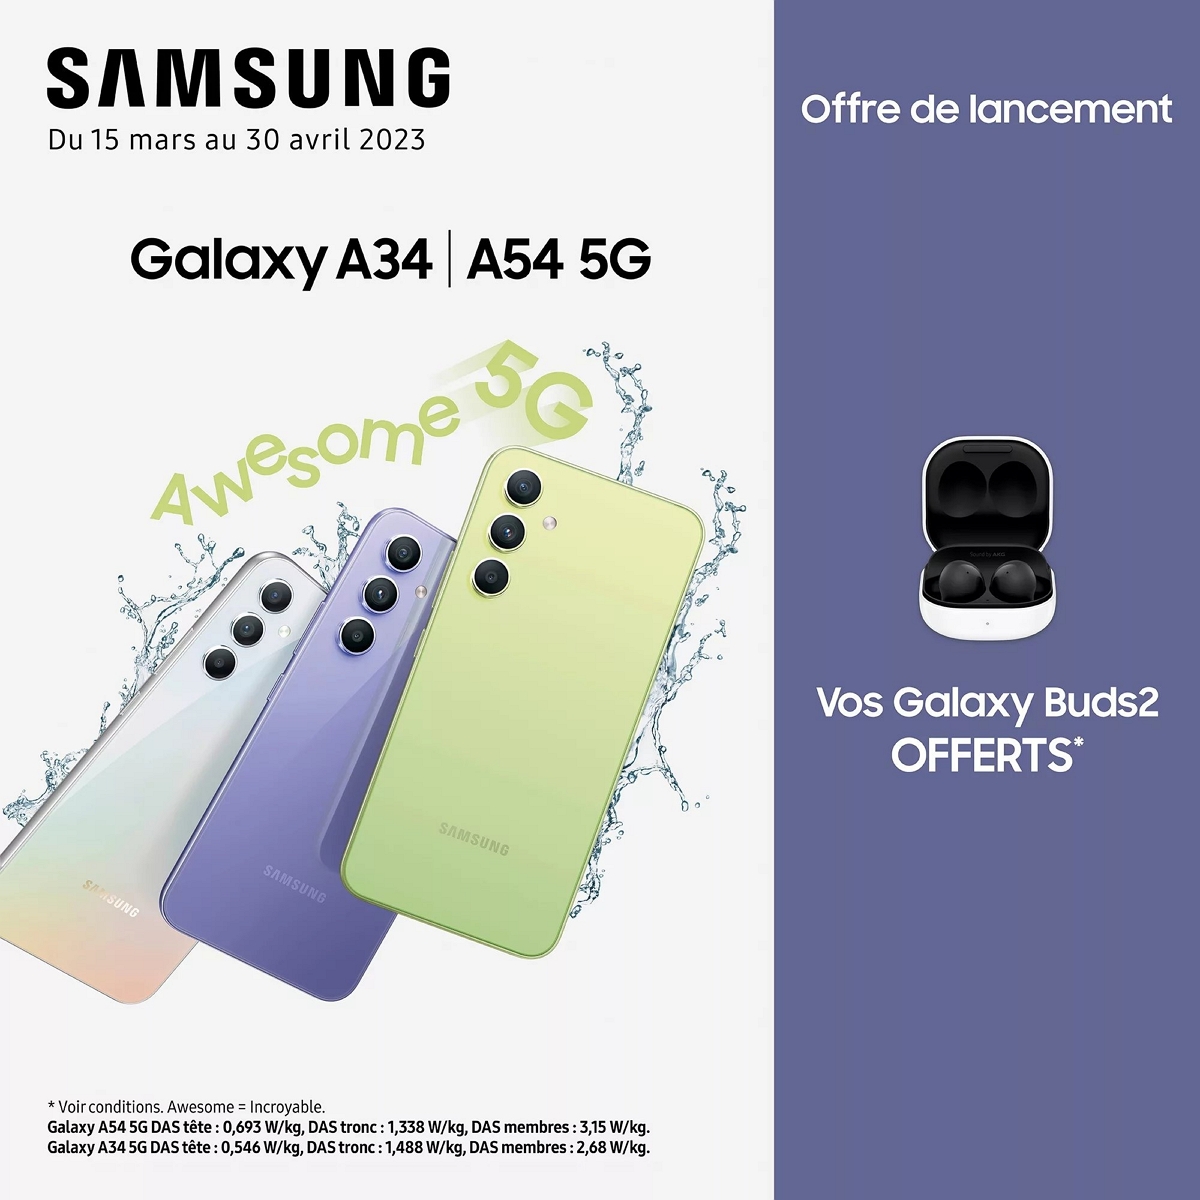 Galaxy A34 et A54